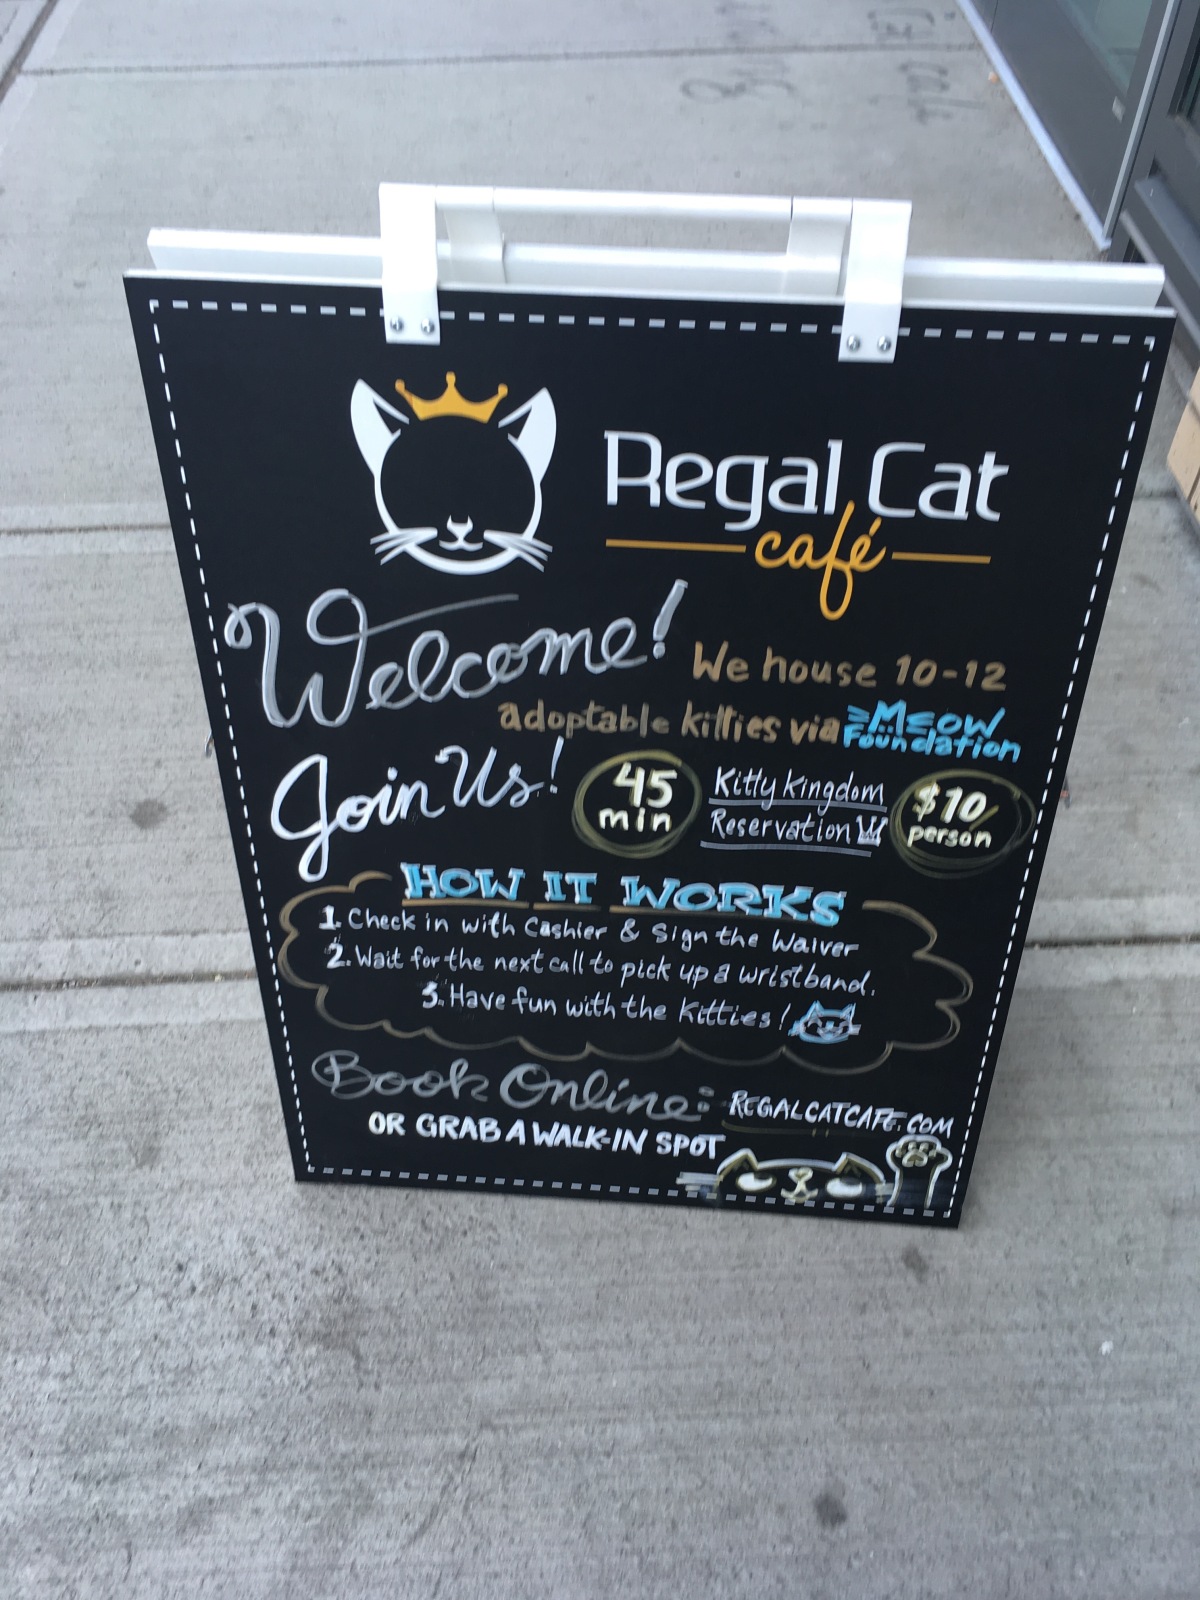 The Regal Cat Café